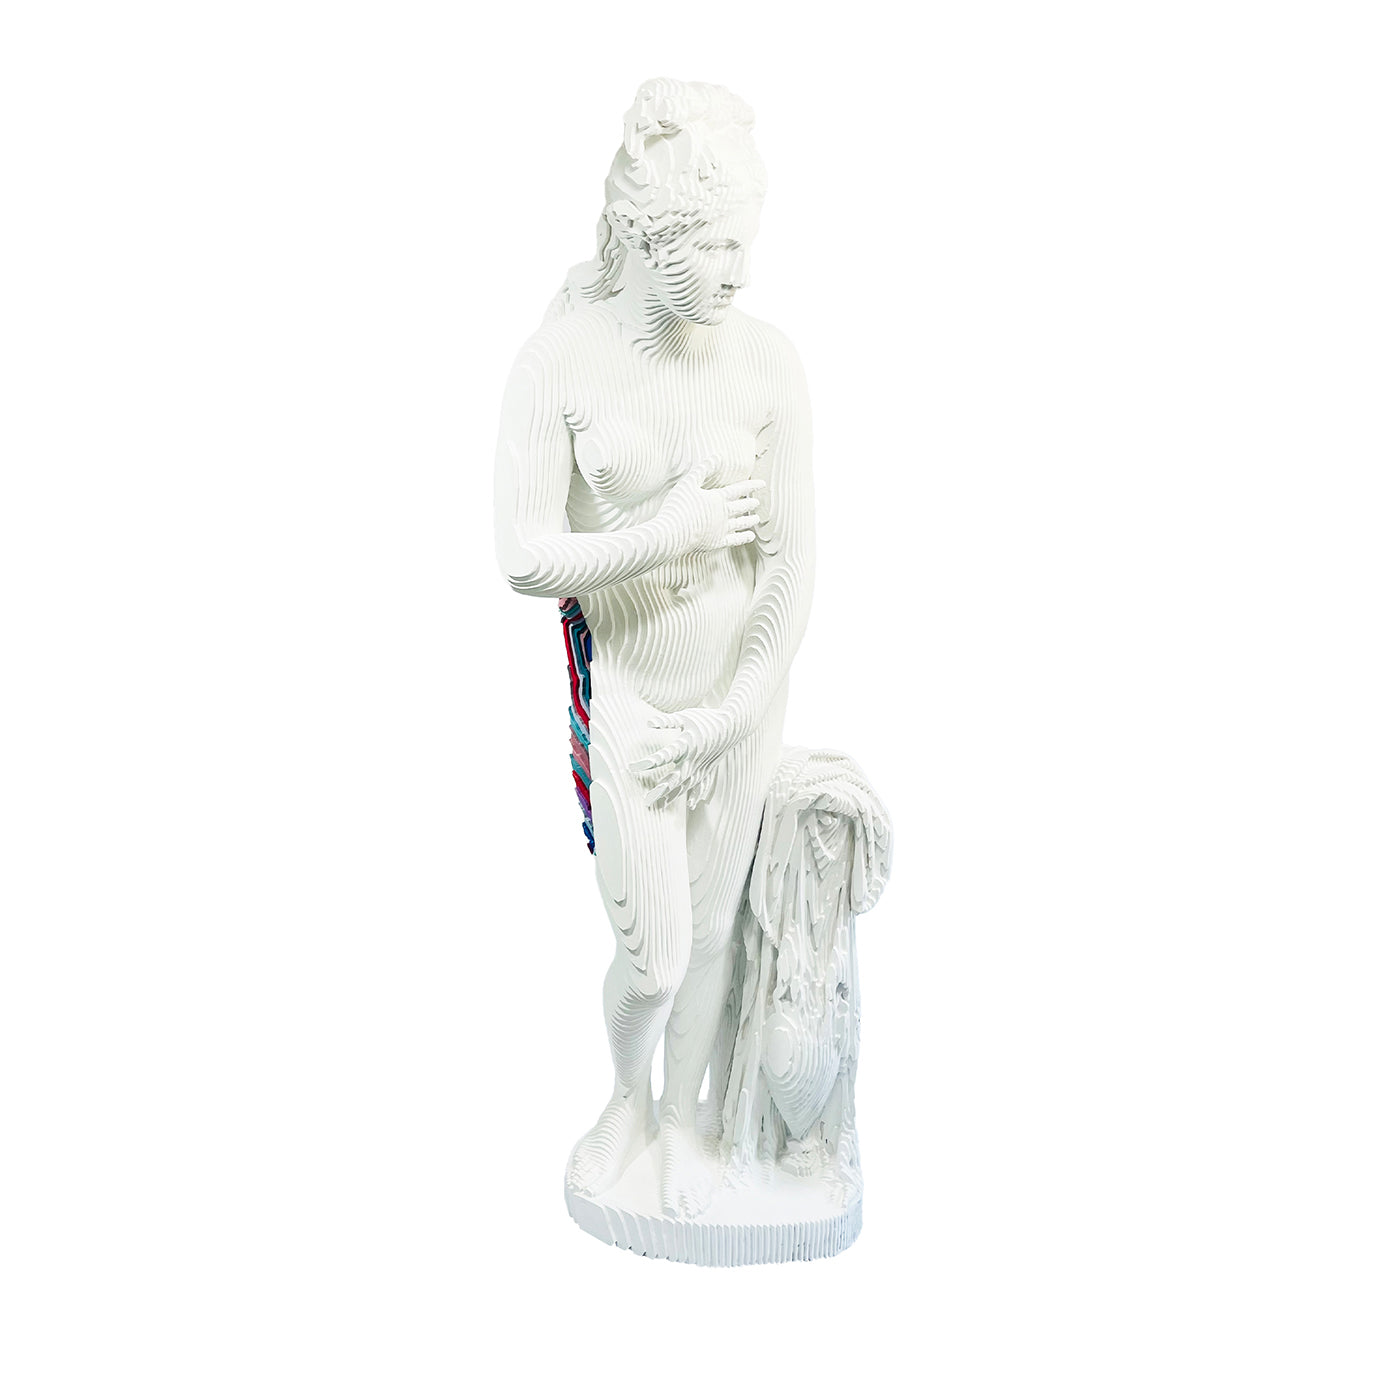 Venus Capitolina Colormination Sculpture - Main view